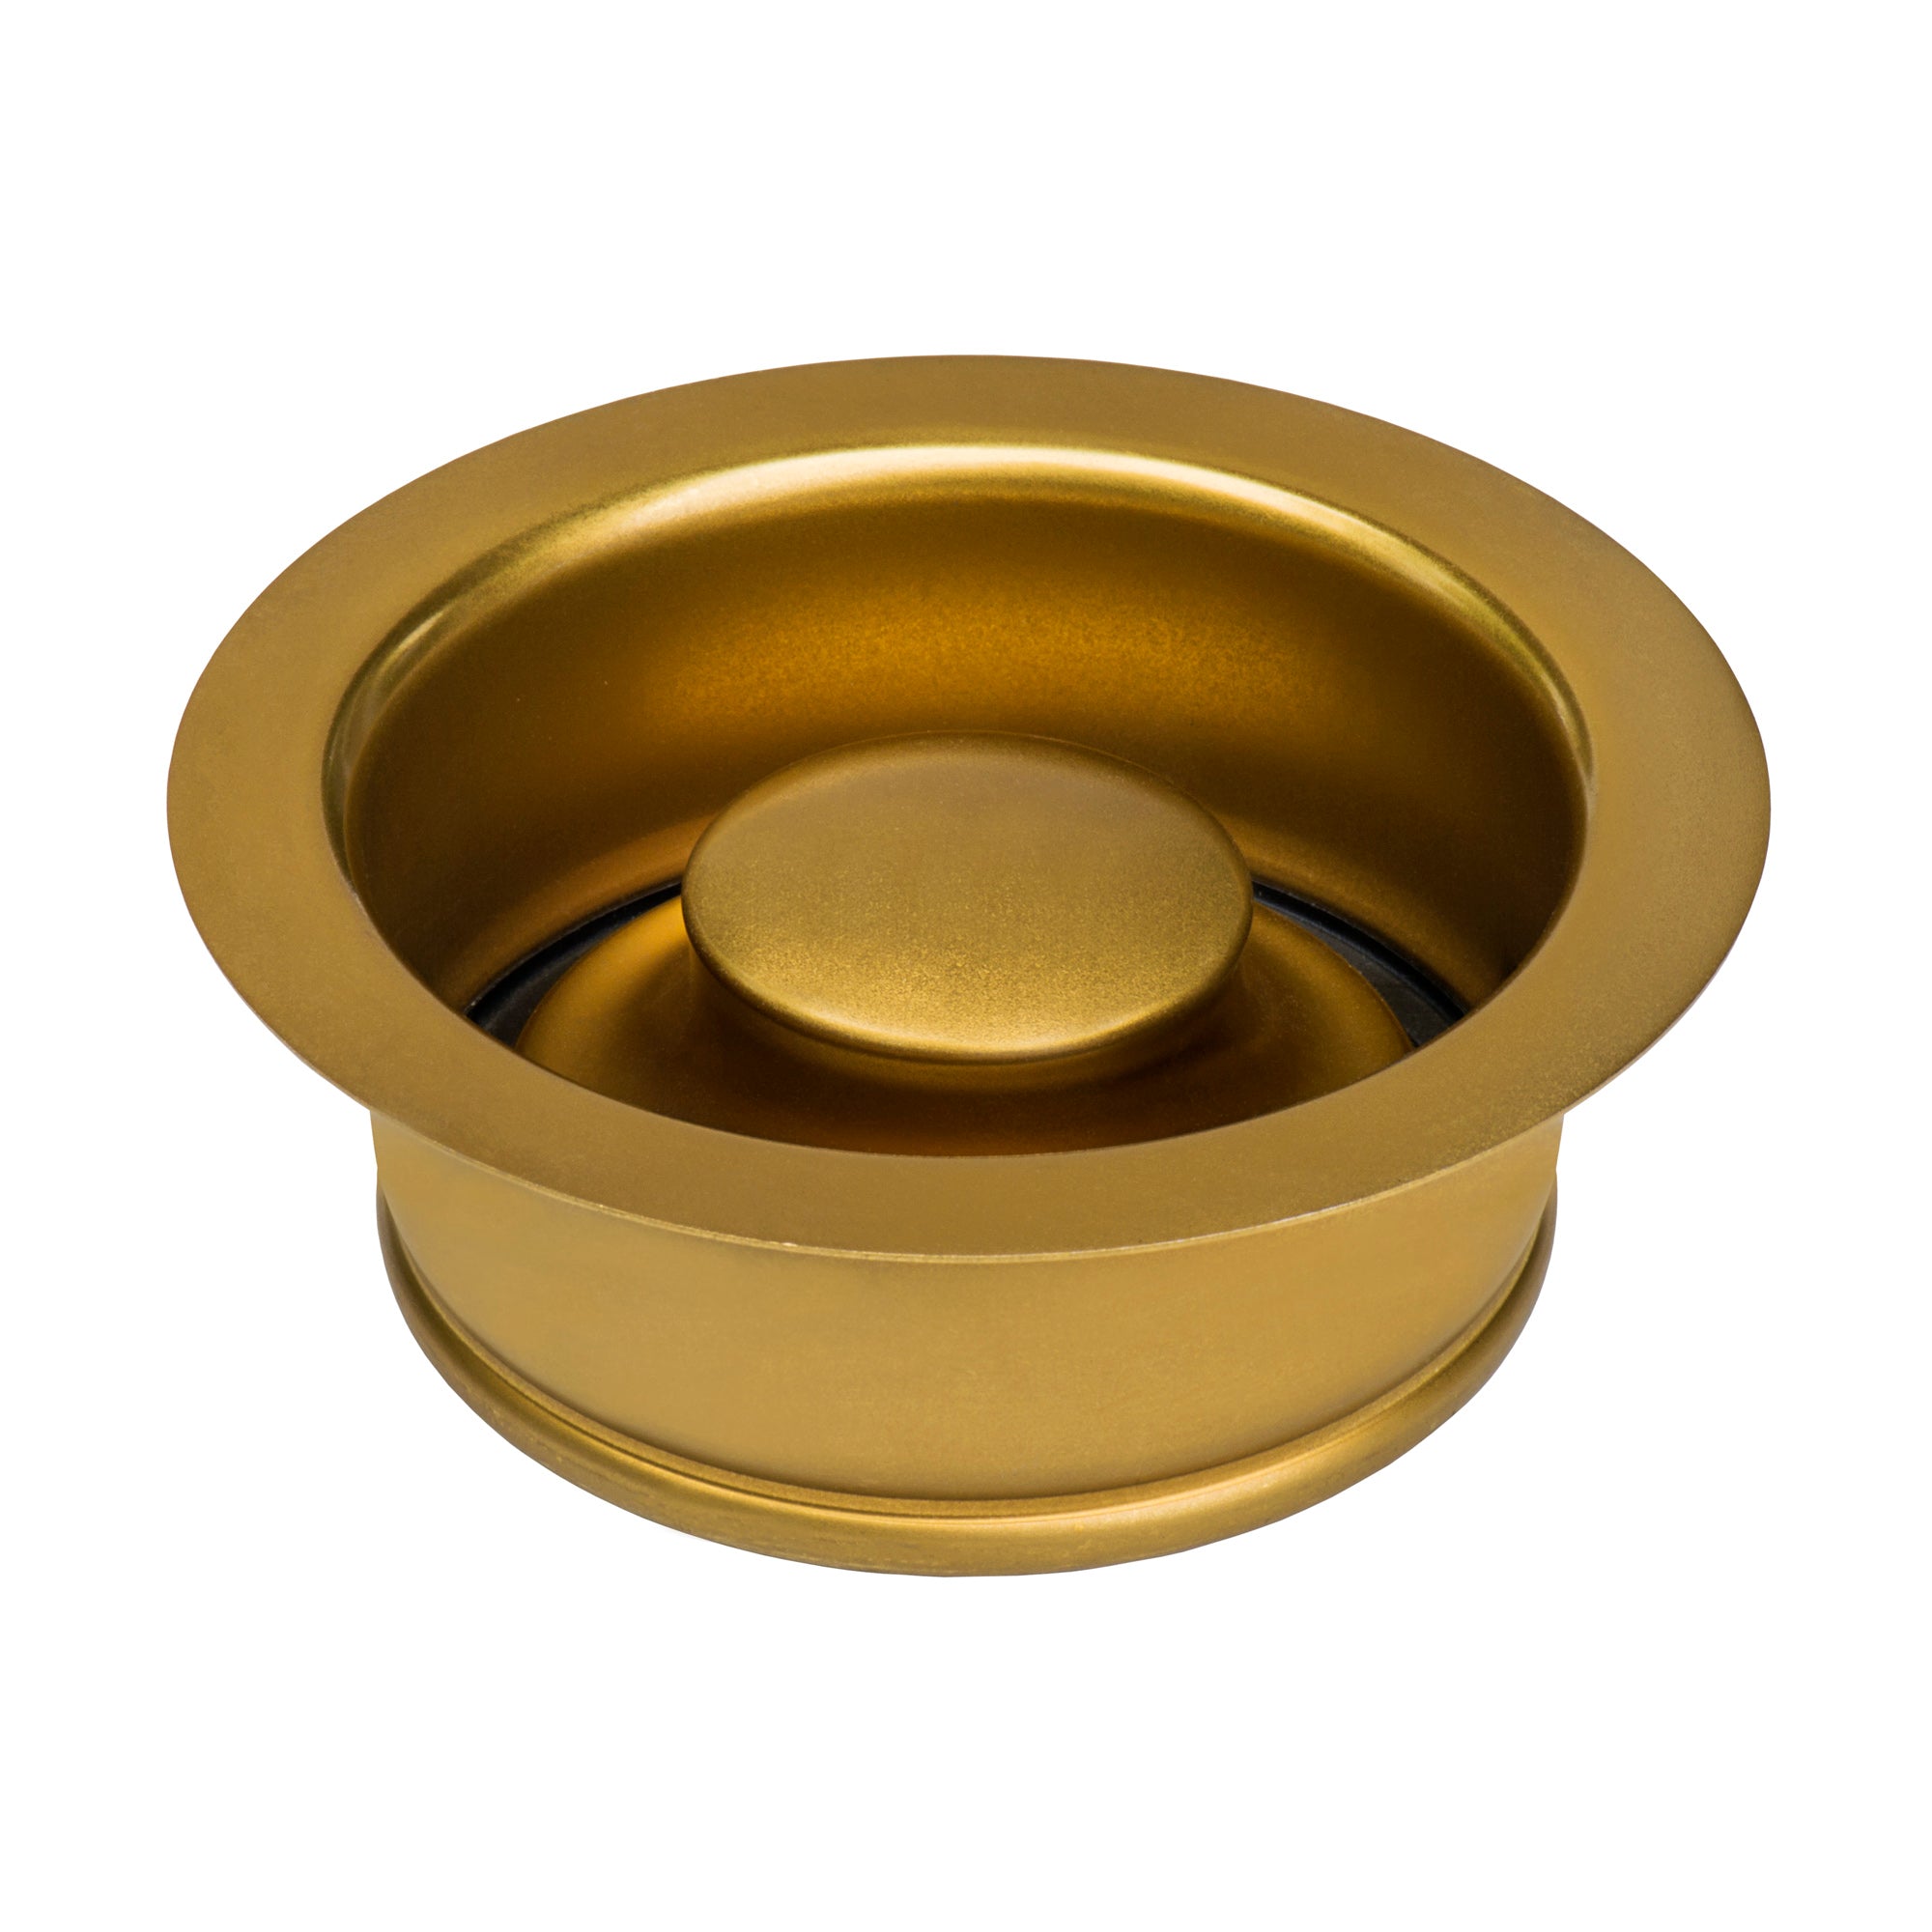 Ruvati Garbage Disposal Flange for Kitchen Sinks – Brass/Gold Tone Stainless Steel – RVA1041GG